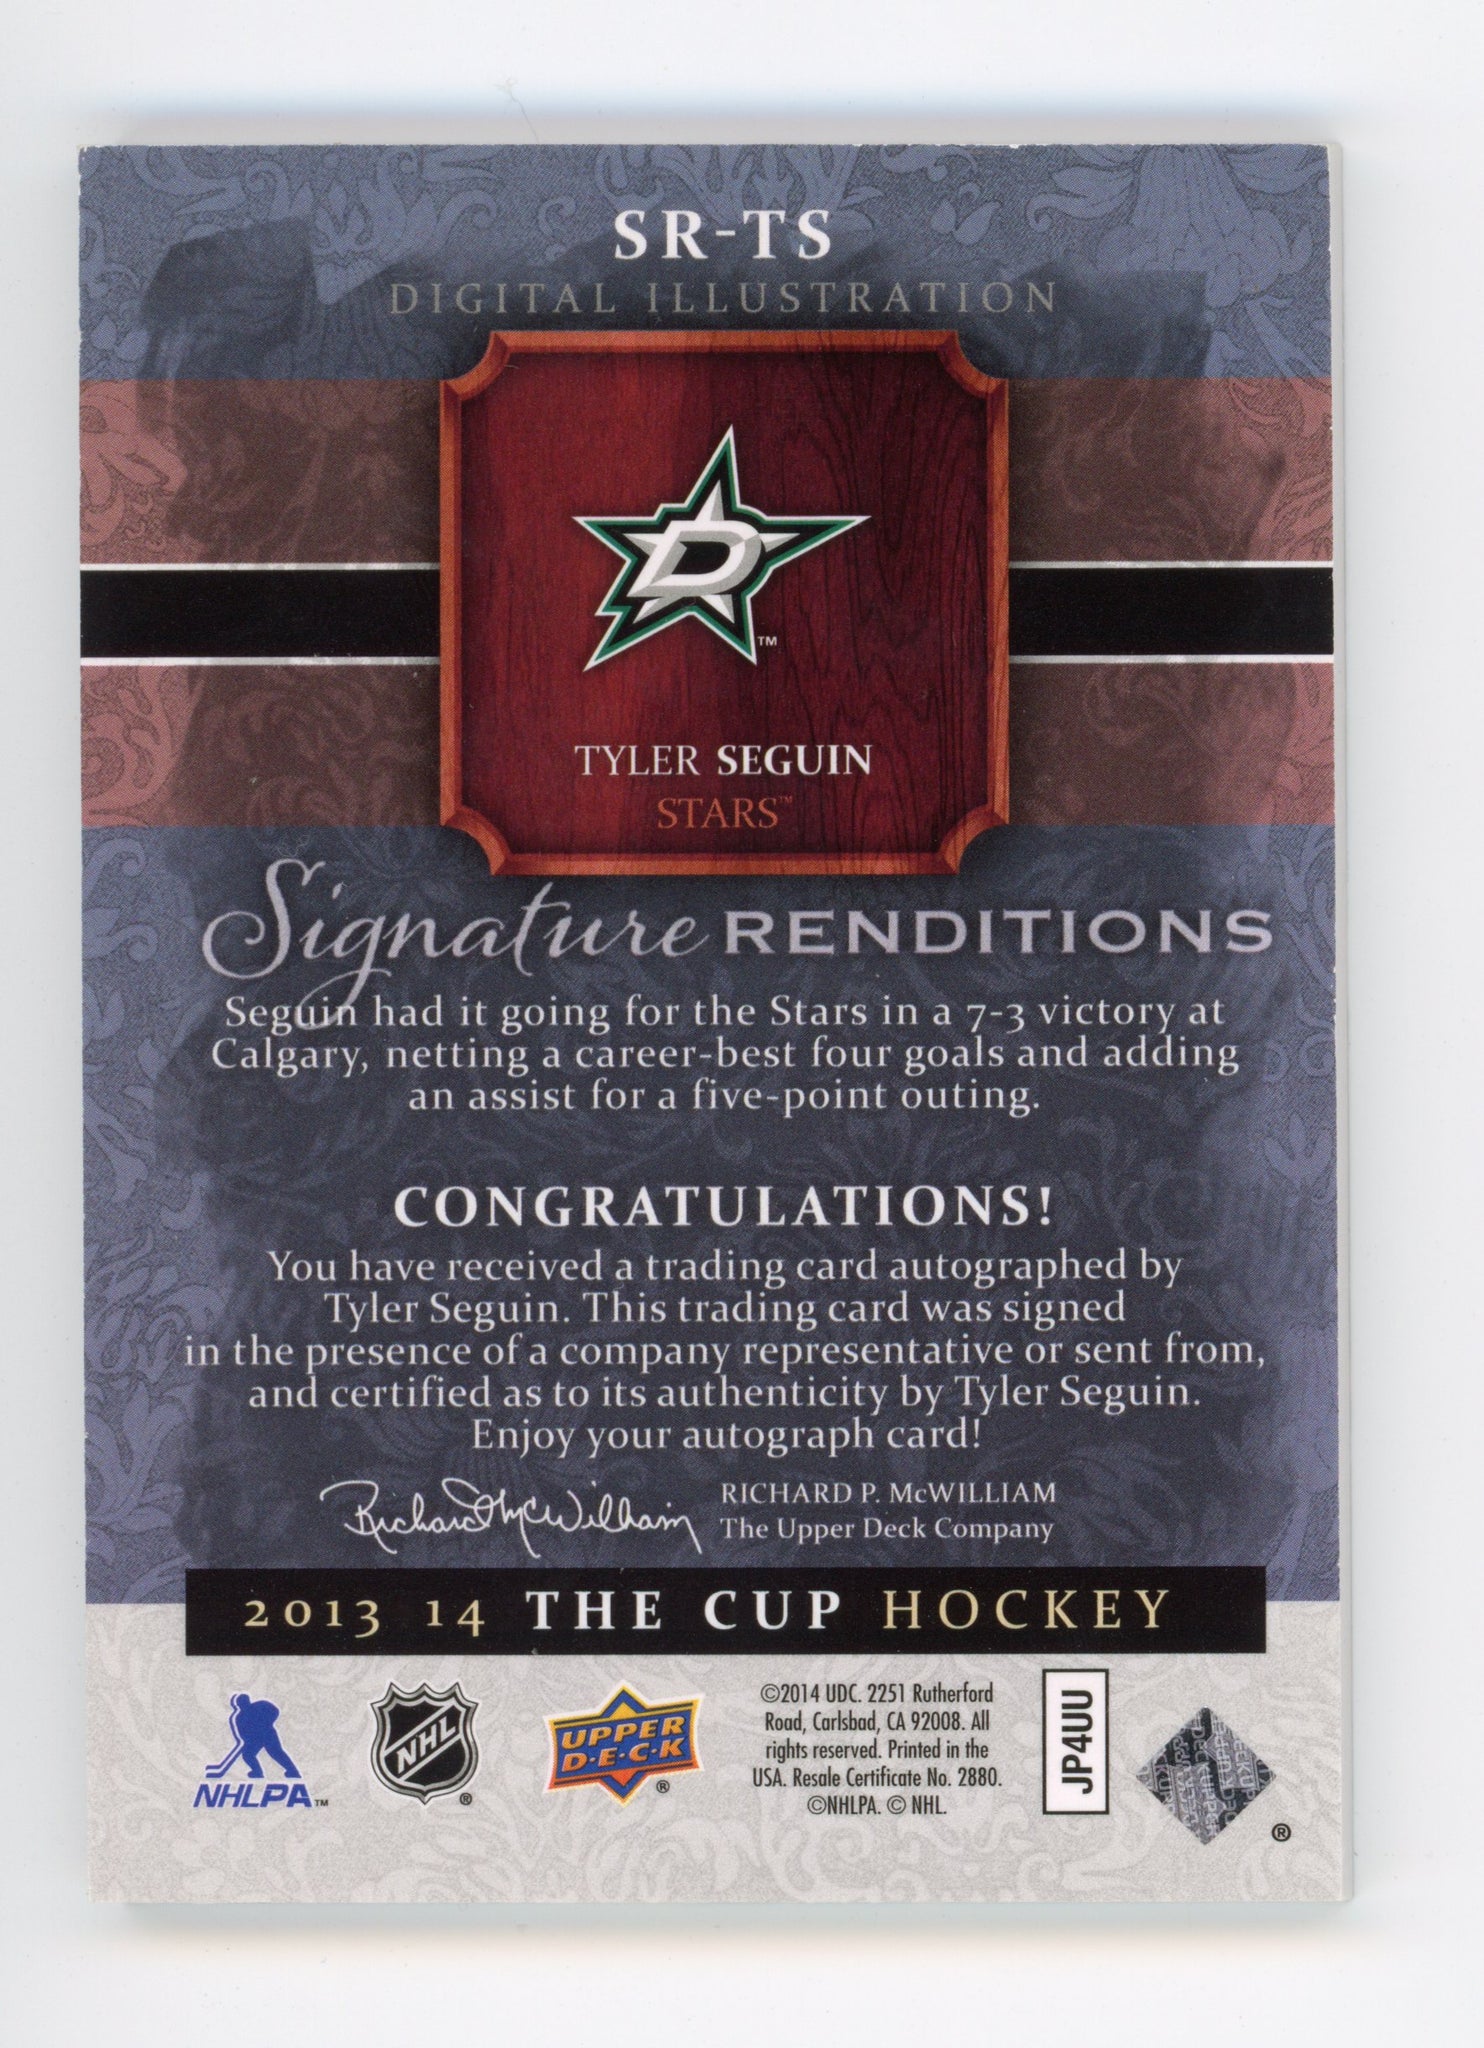 2013-2014 Tyler Seguin Signature Renditions #d /35 The Cup Dallas Stars # SR-TS